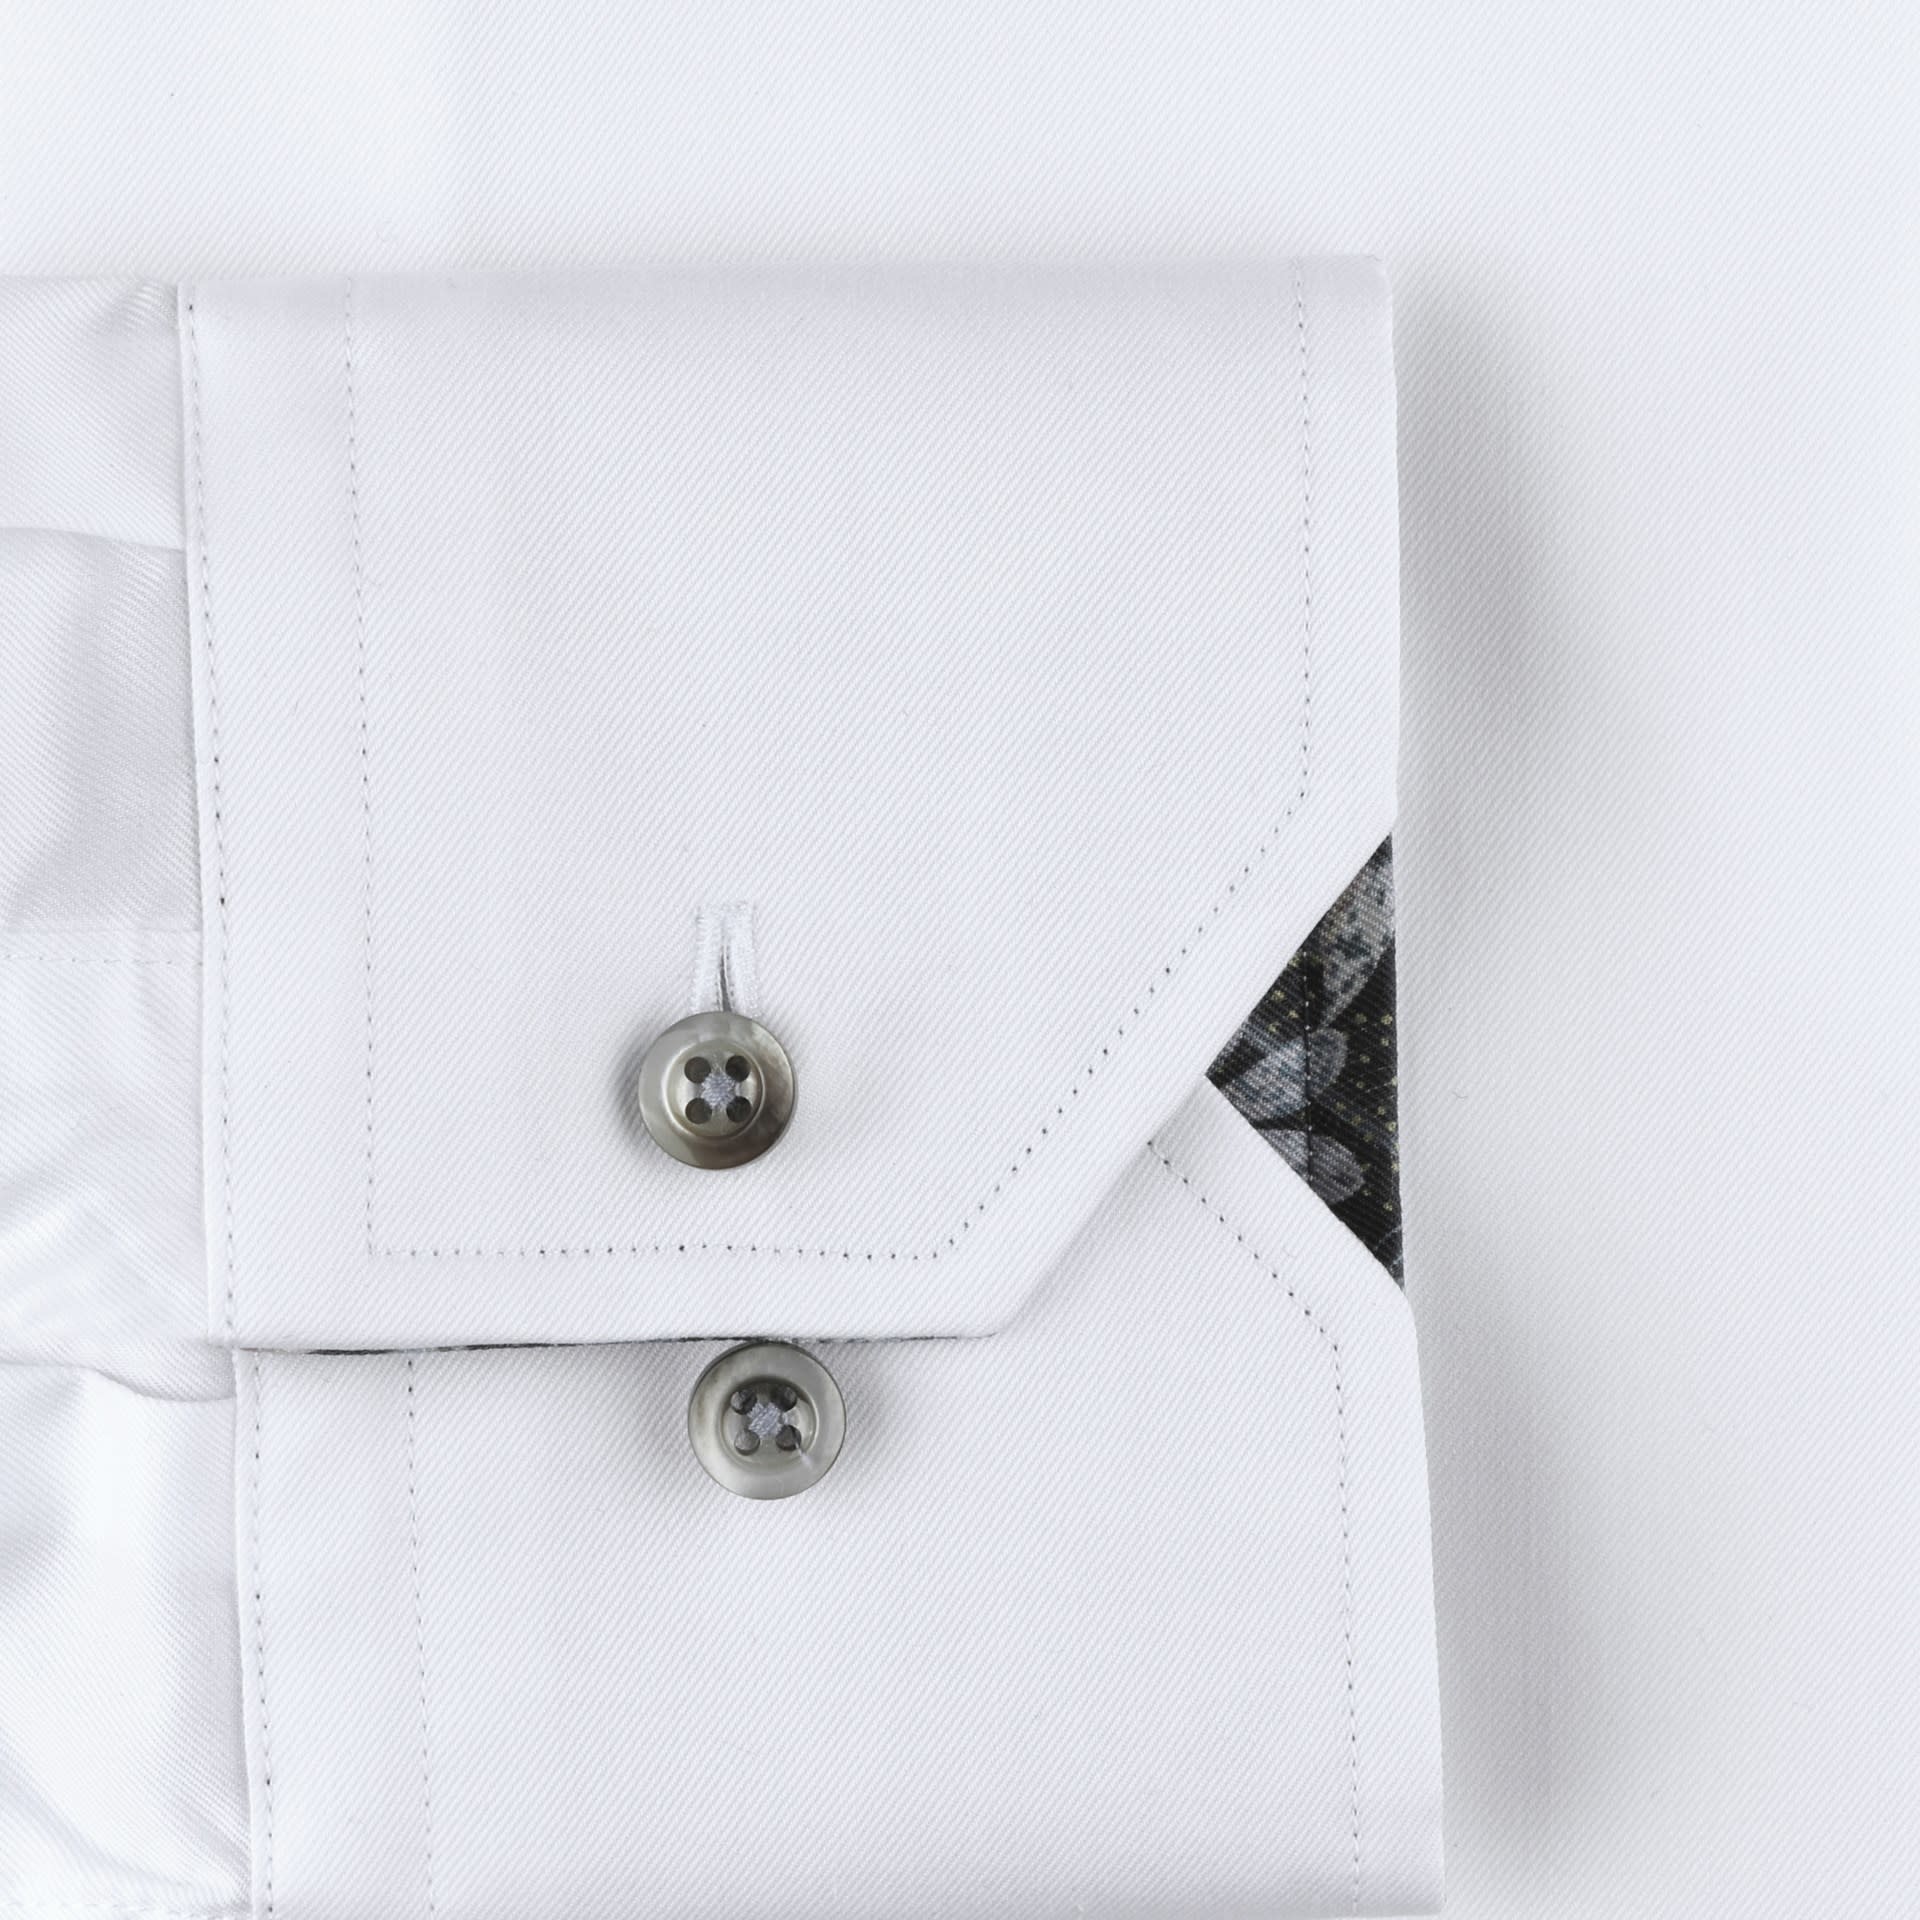 Stenstroms White Contrast twill shirt